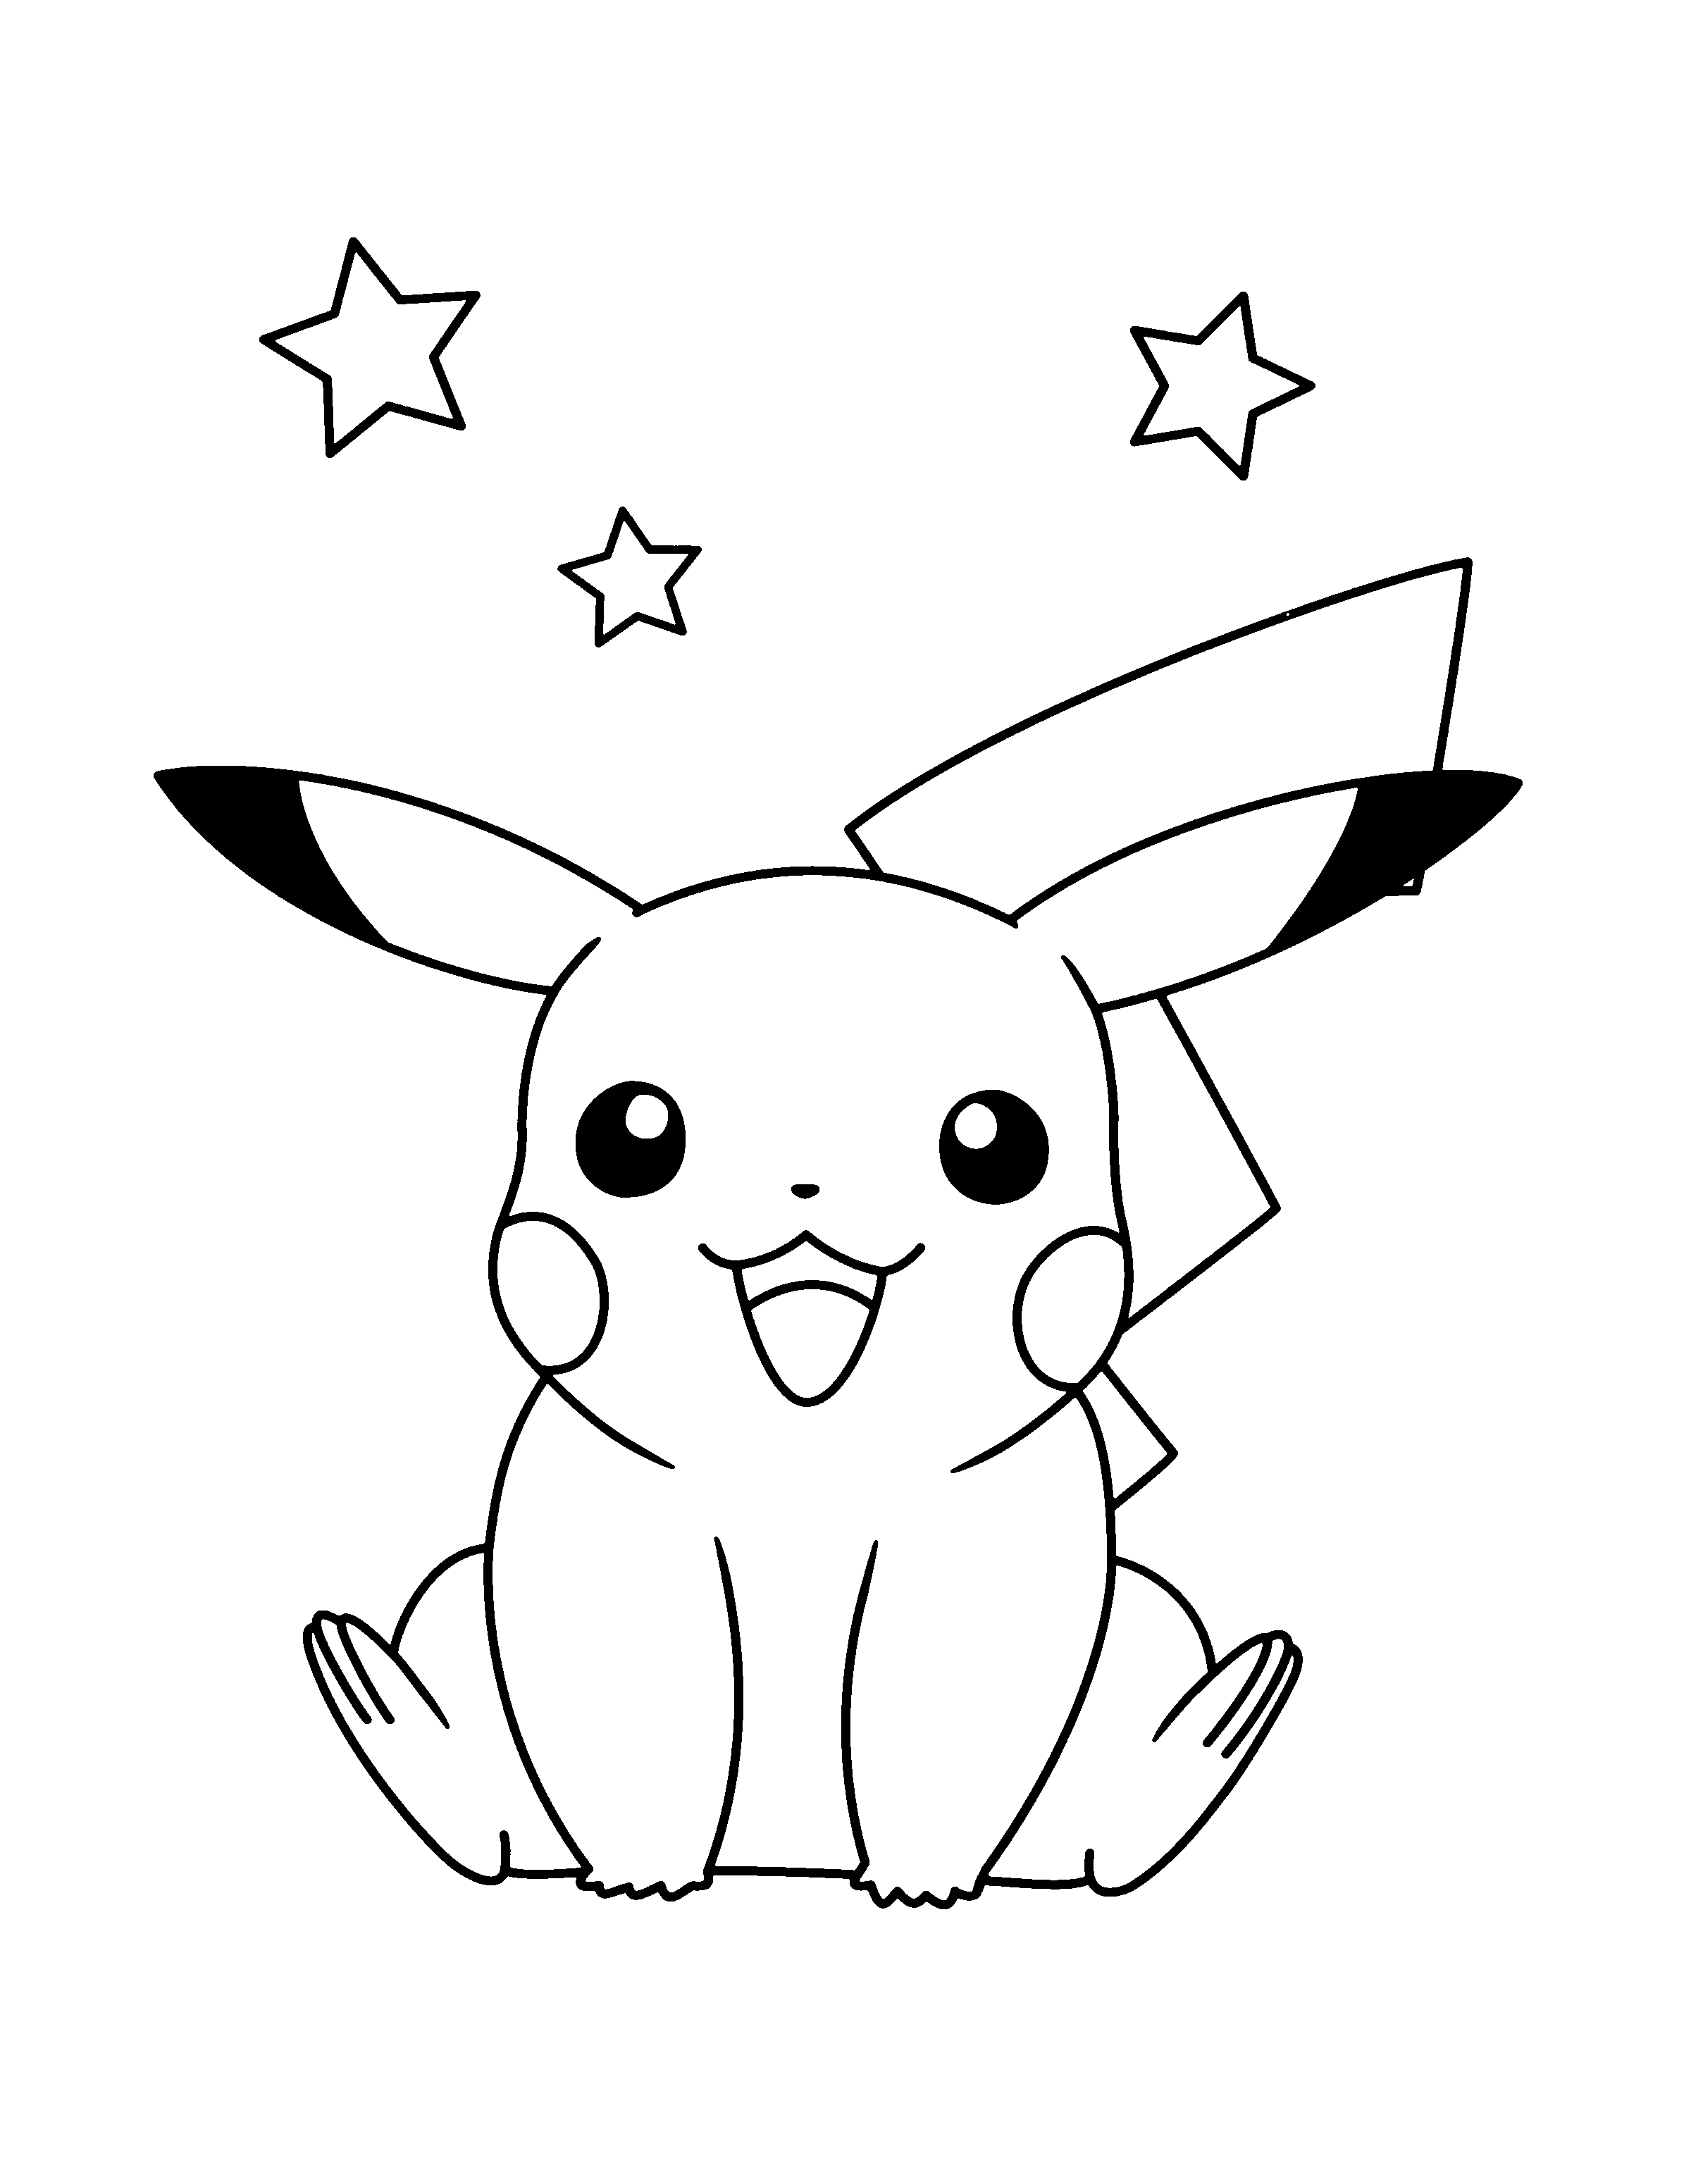 Coloriage pikachu gratuit - dessin a imprimer #6